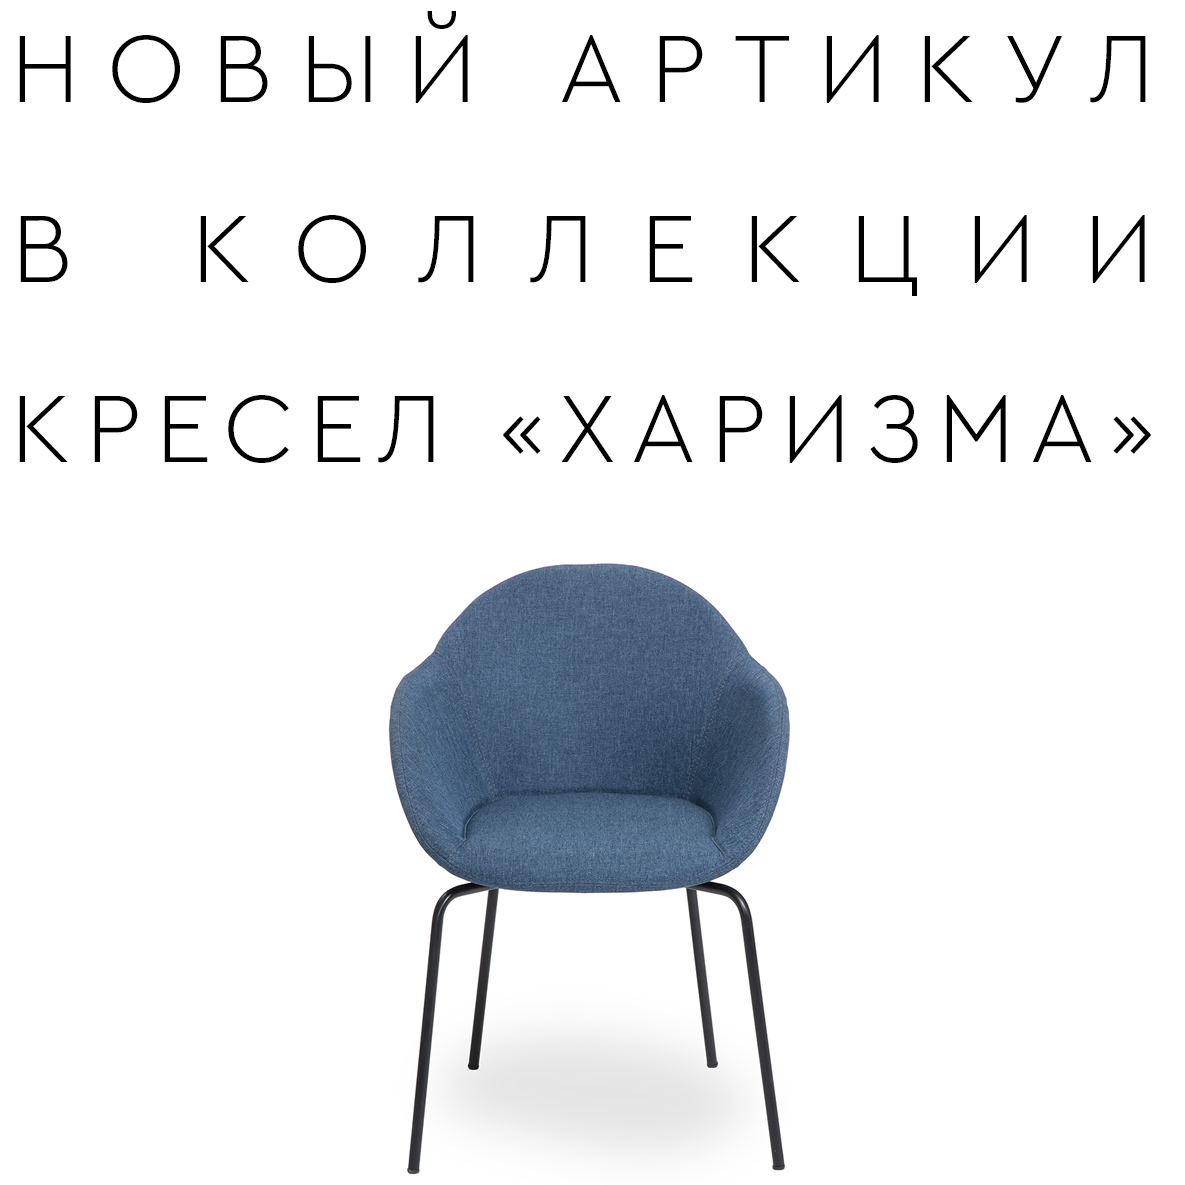 Новое кресло «ХАРИЗМА»